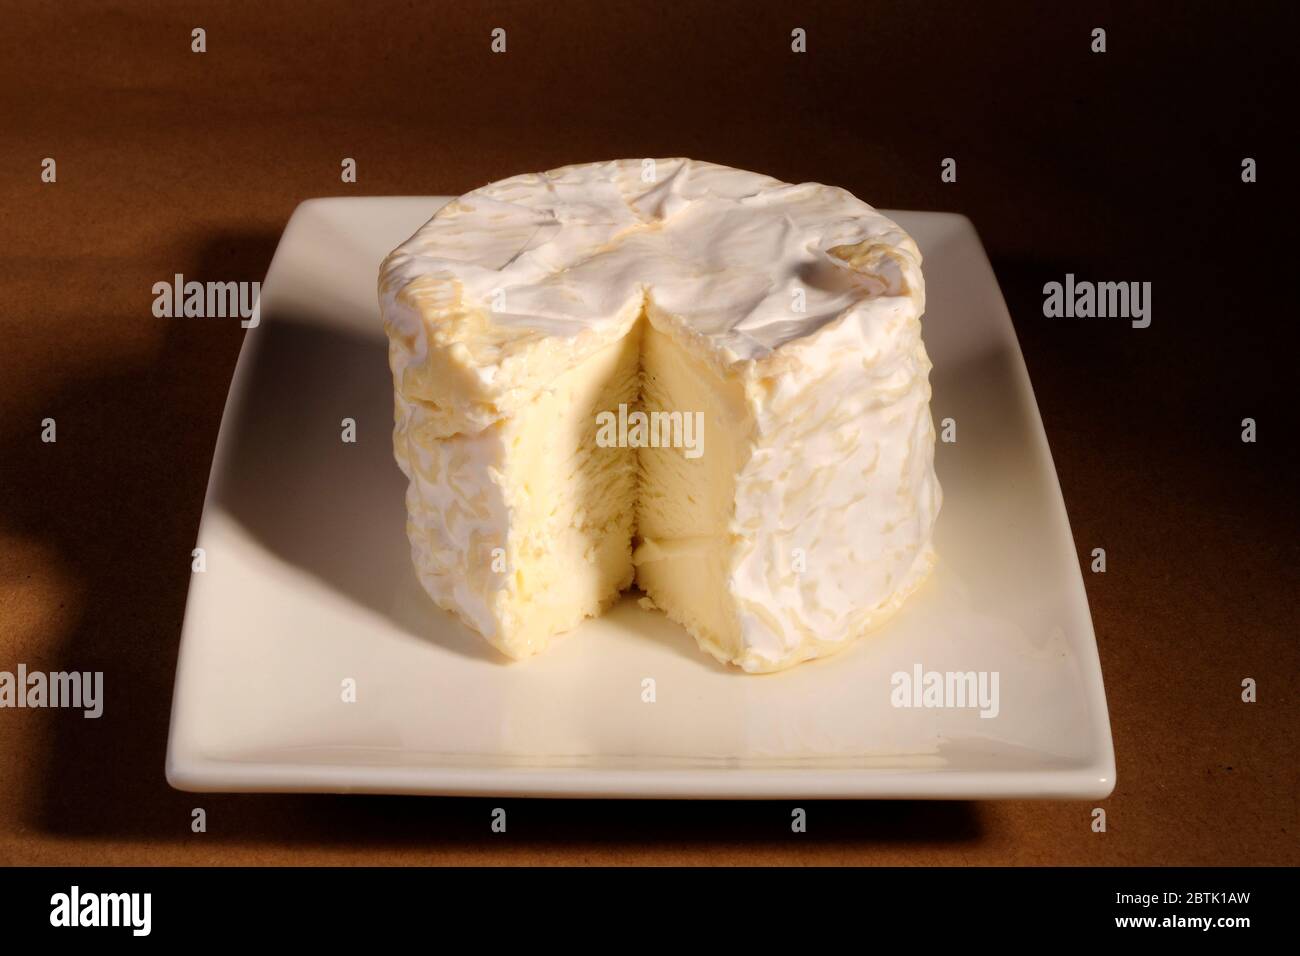 soft white creamy french cheese Stock Photo